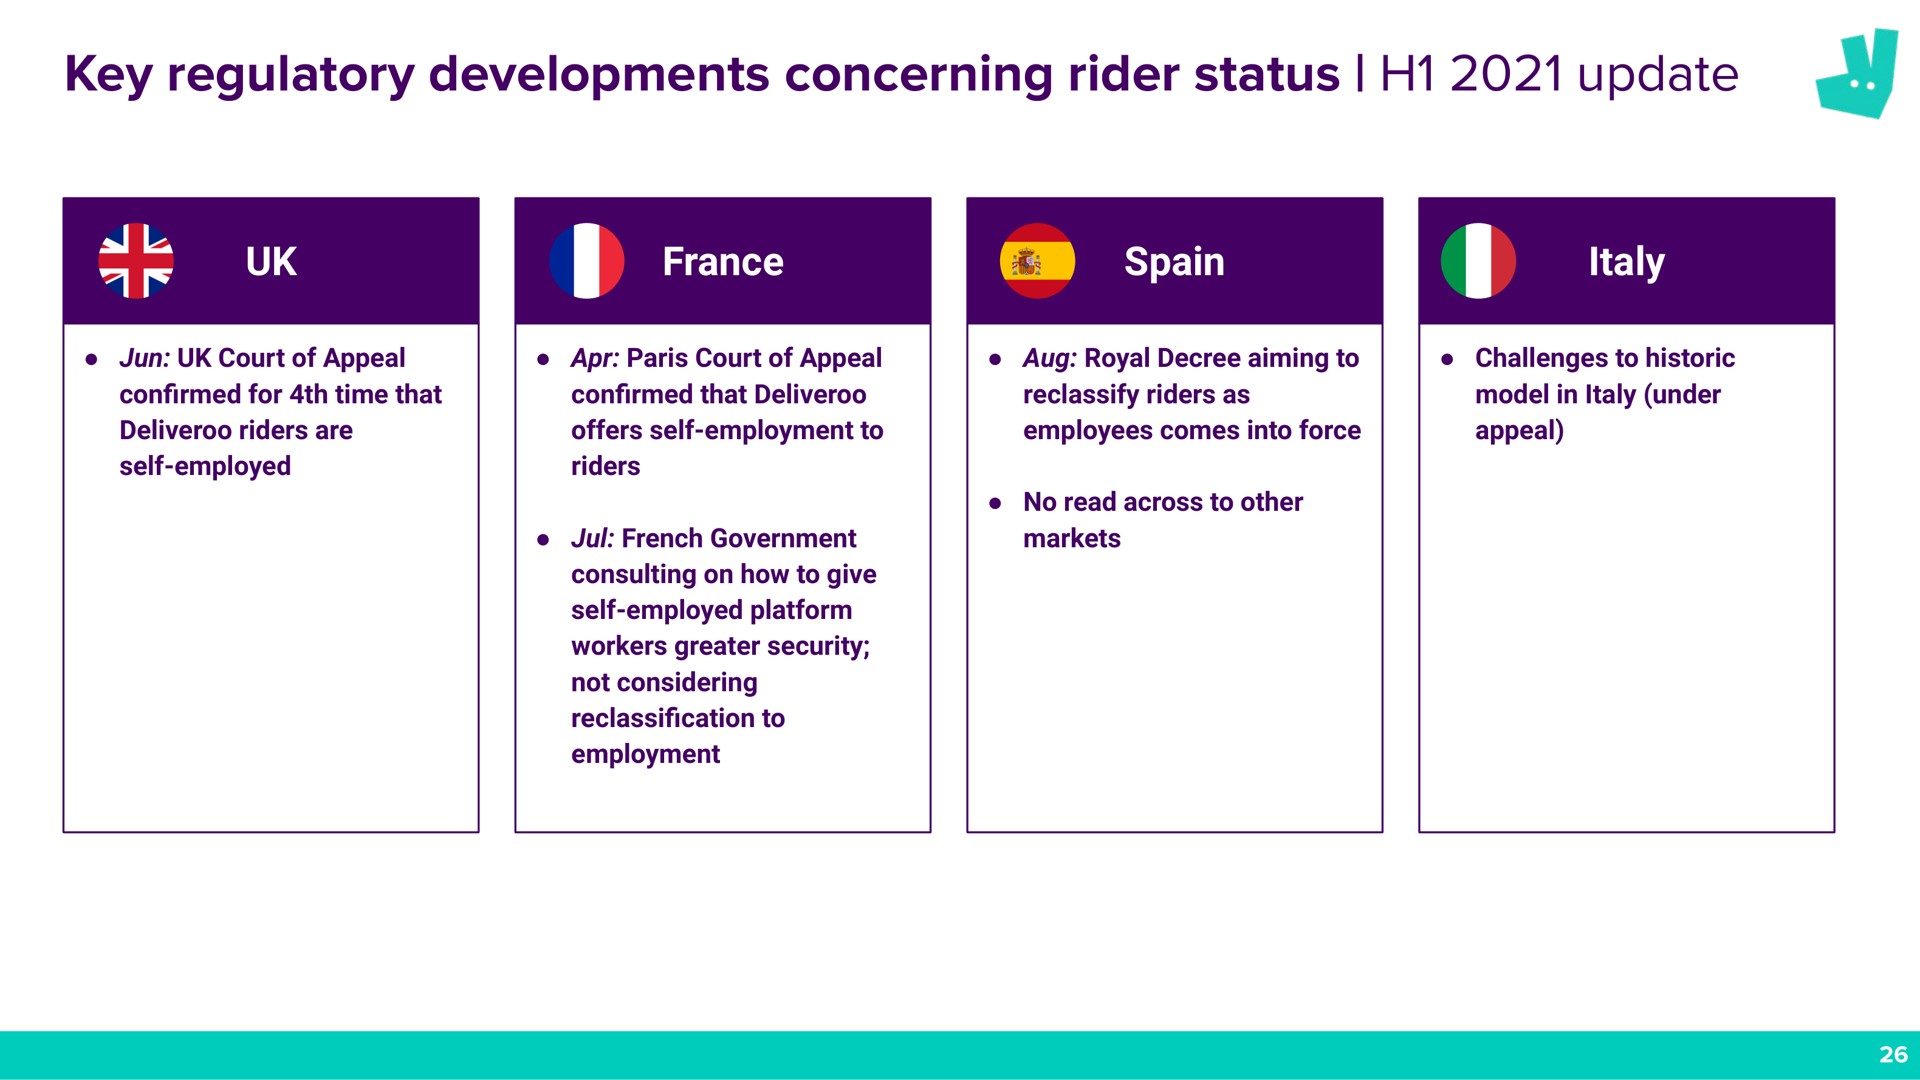 key regulatory developments concerning rider status update a | Deliveroo